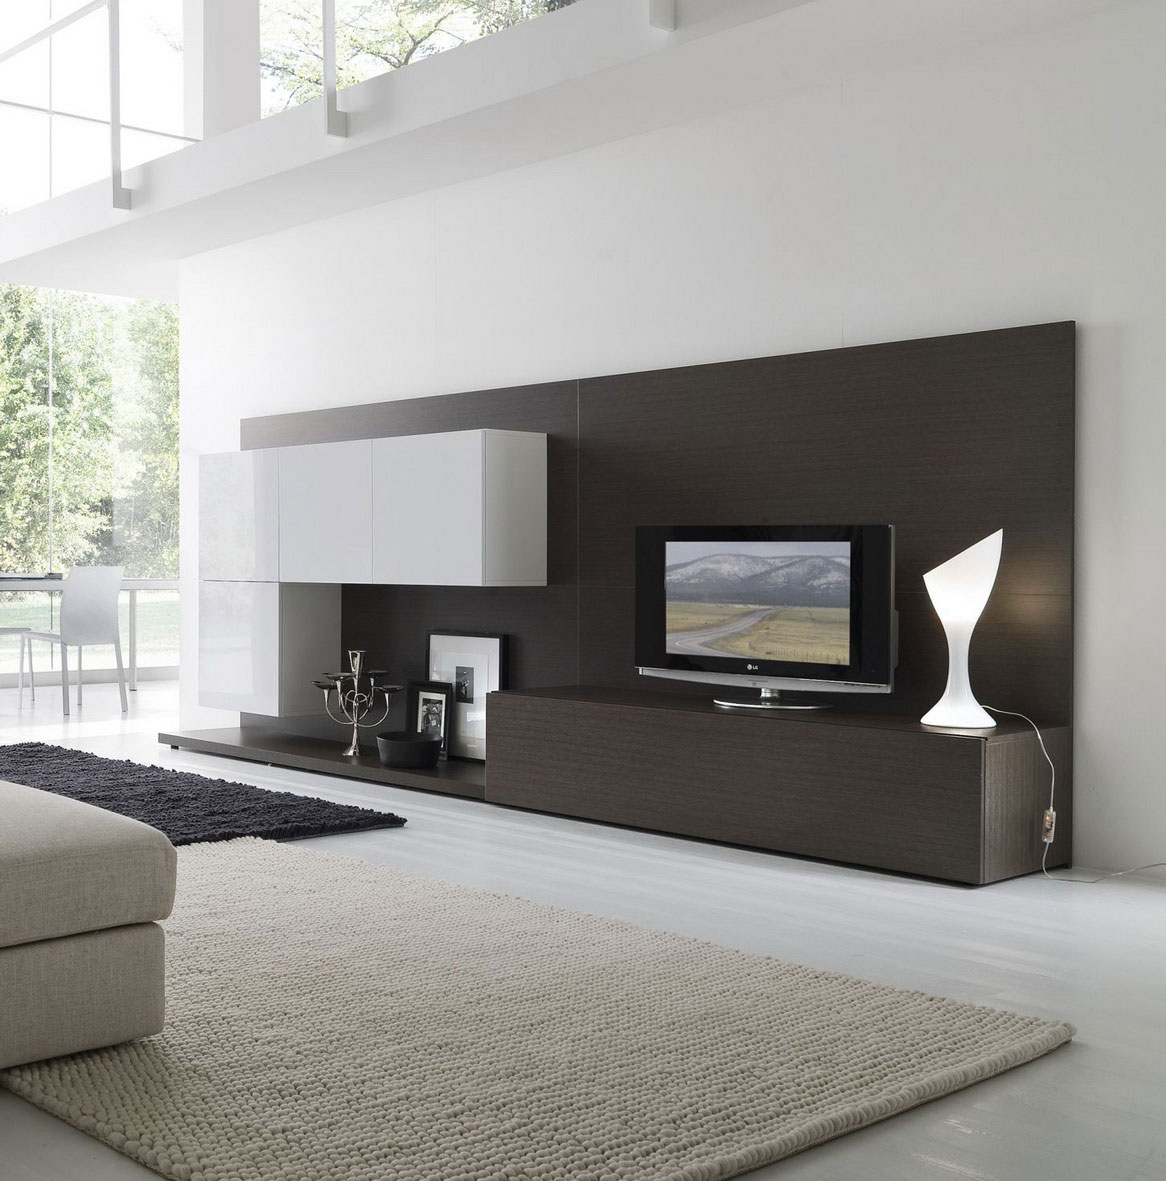  commodern interior design living room 9566 hd wallpapershtml